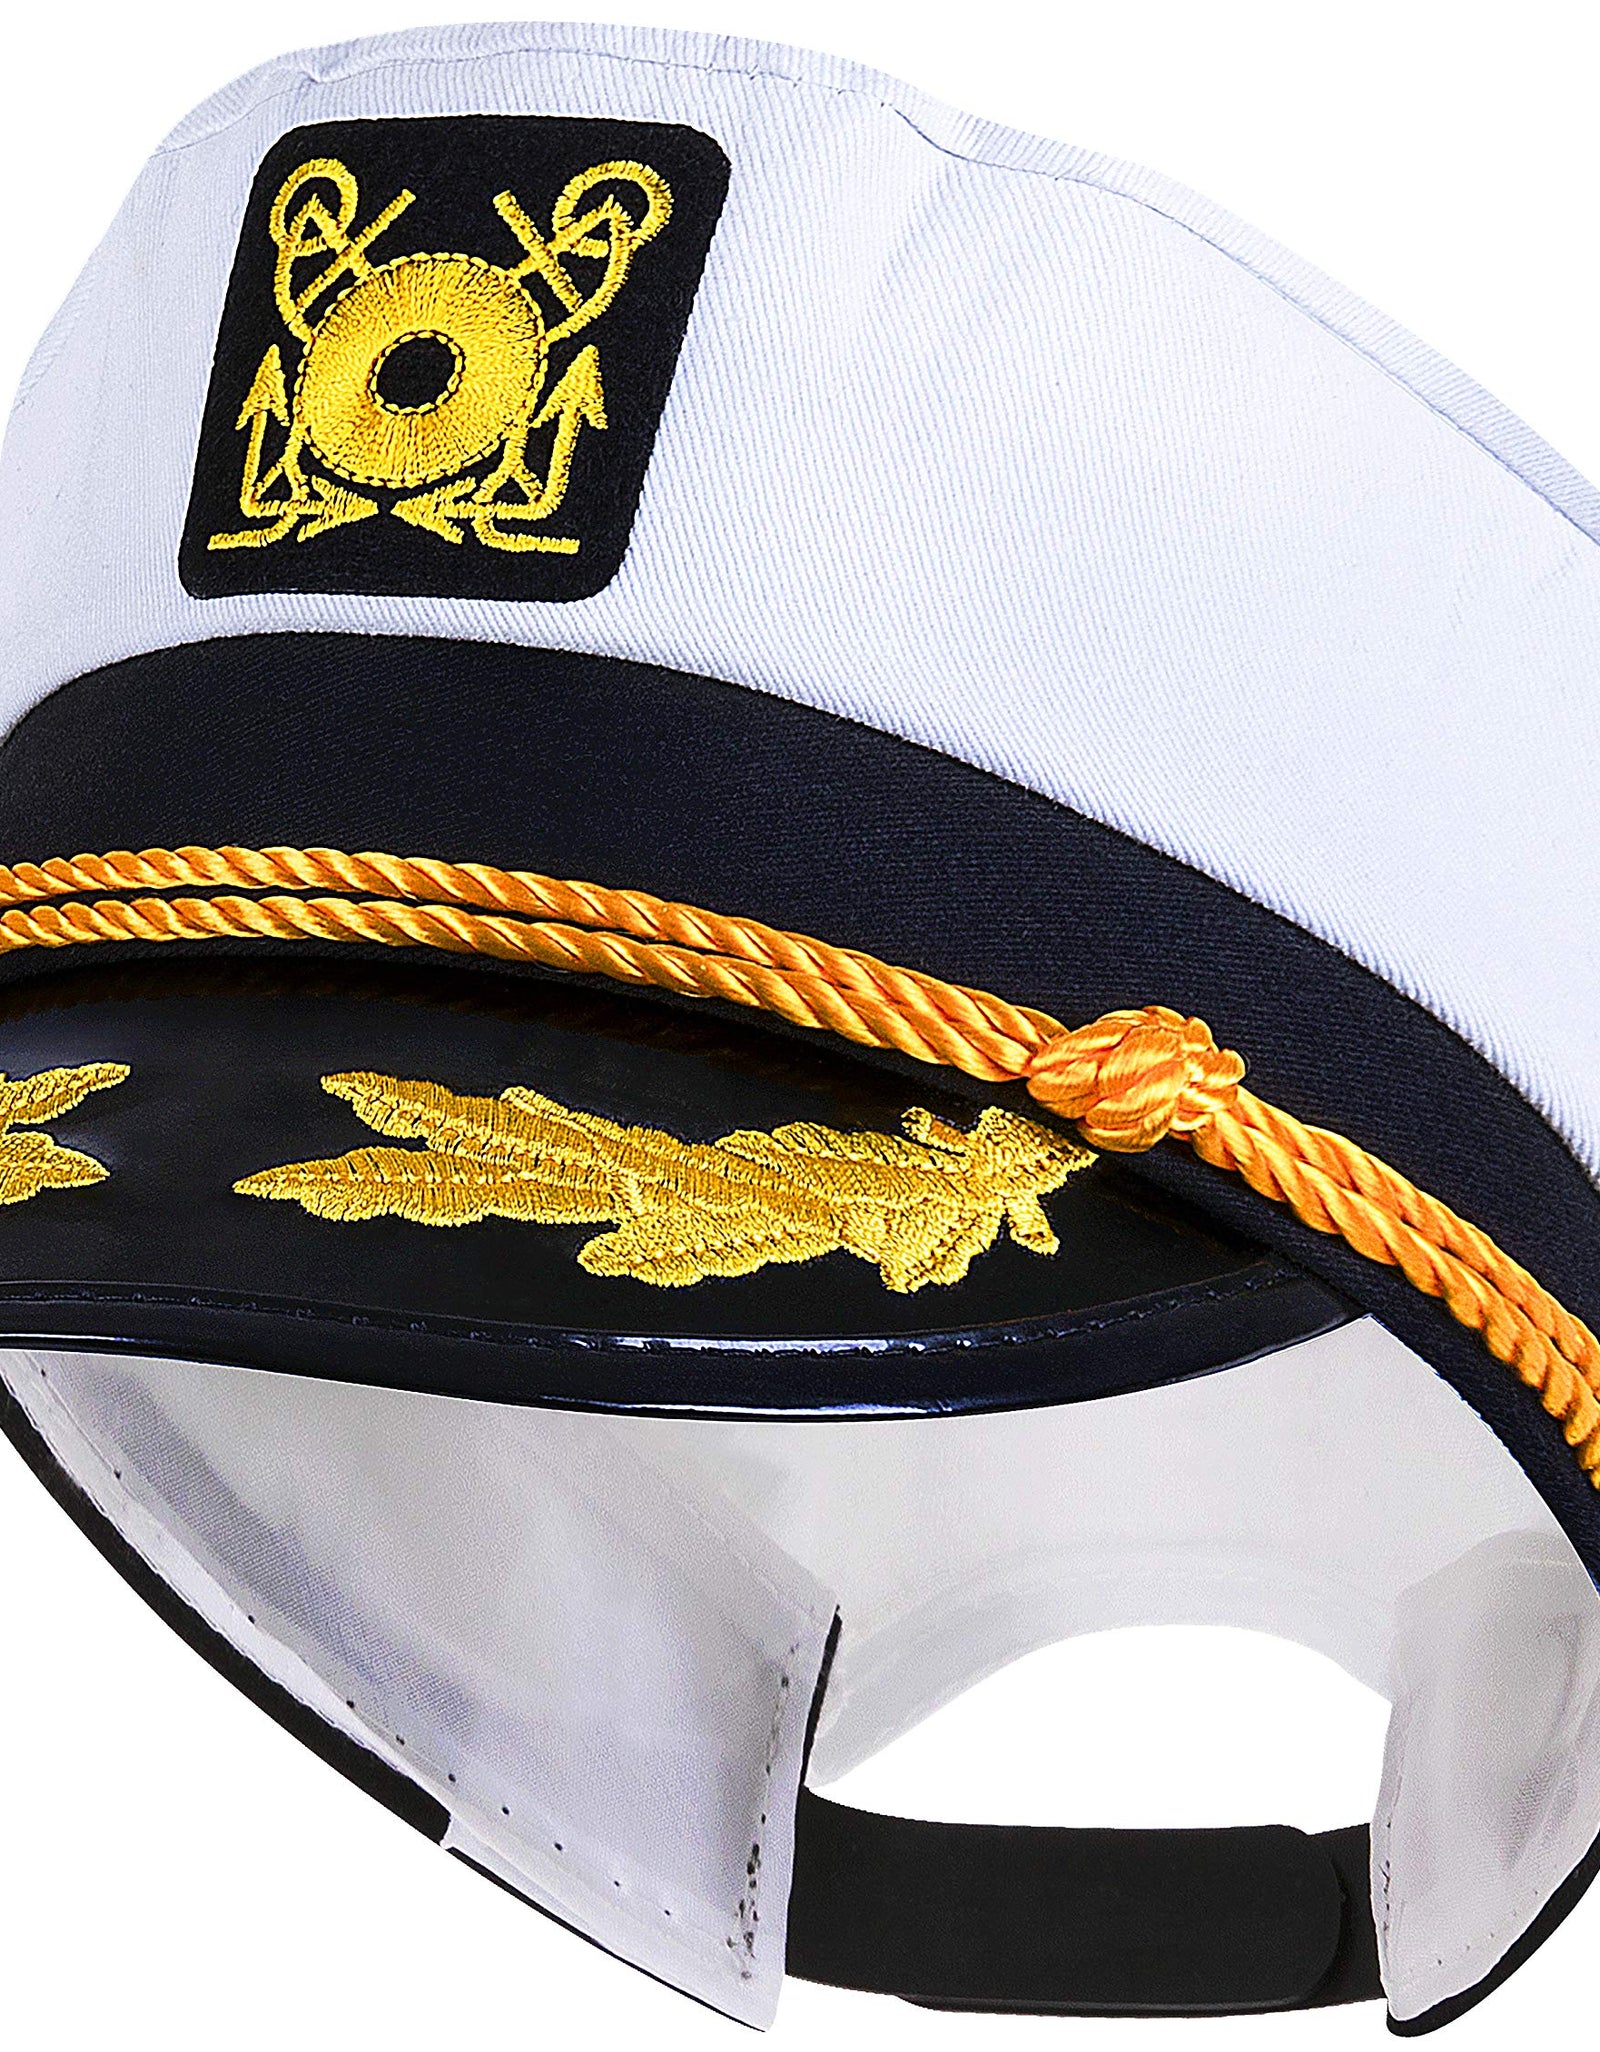 KANGAROO Adjustable Adult Captain's Yacht Cap, White